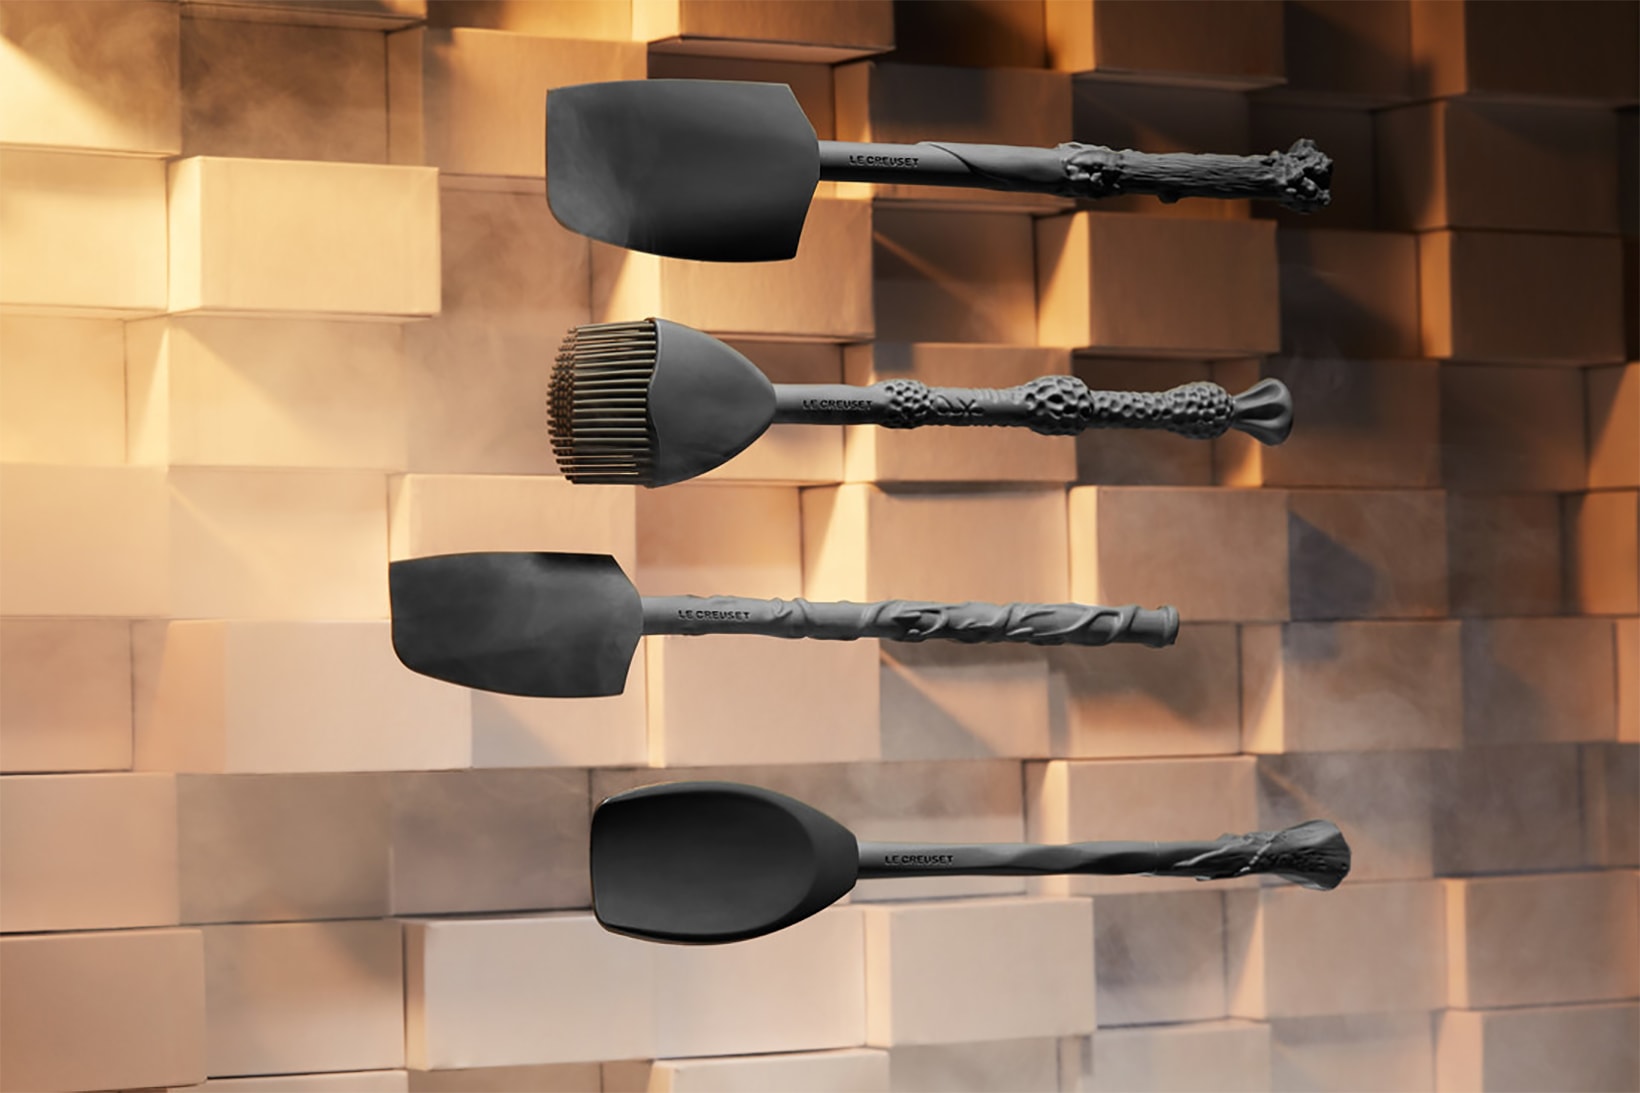 Le Creuset Harry Potter Kitchenware Collaboration Collection spatulas